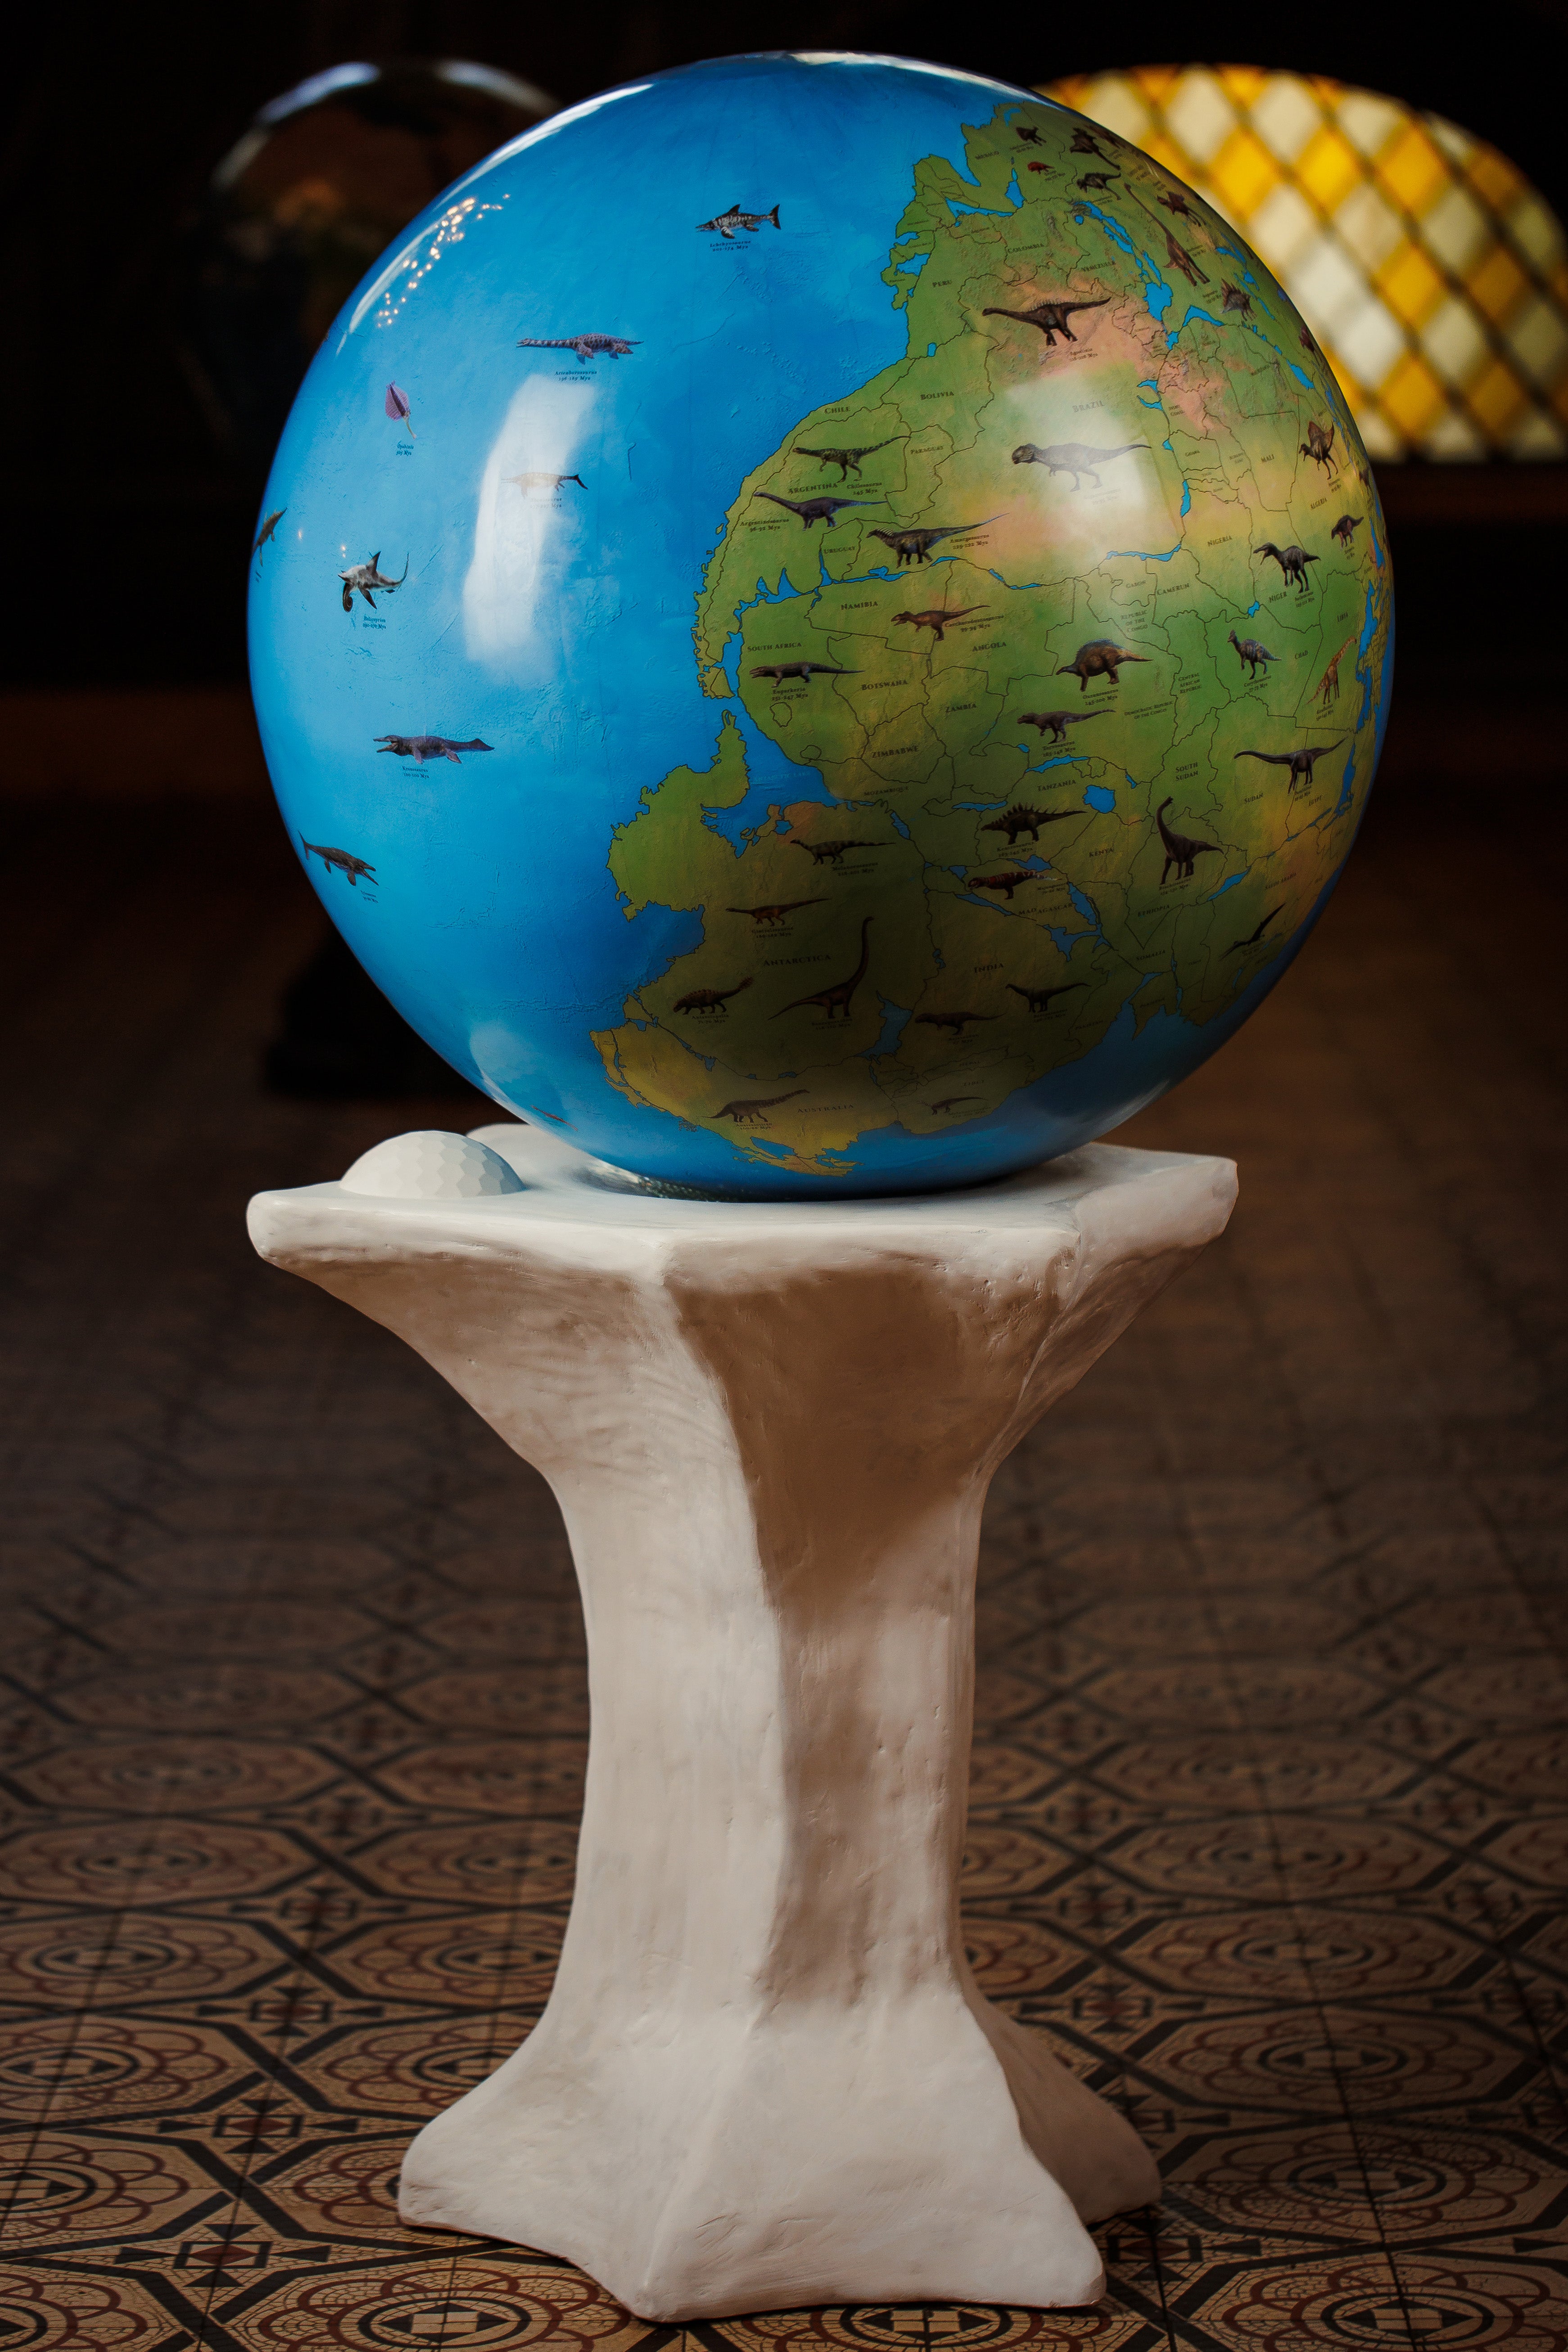 Pangea - Earth 200 million years ago - The Blue Planet Globe - Large world globes custom globe